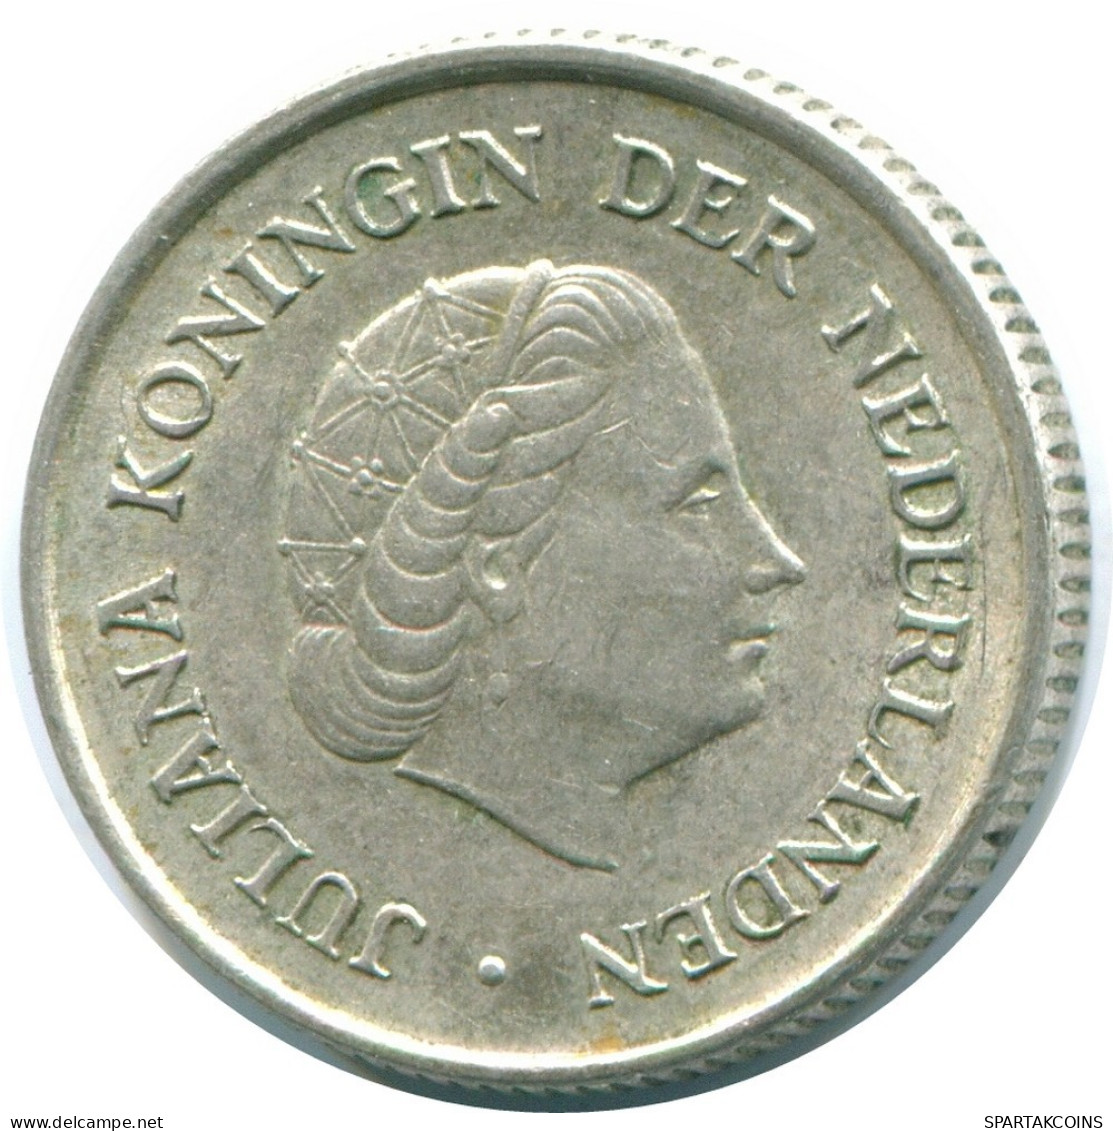 1/4 GULDEN 1970 NIEDERLÄNDISCHE ANTILLEN SILBER Koloniale Münze #NL11636.4.D.A - Netherlands Antilles